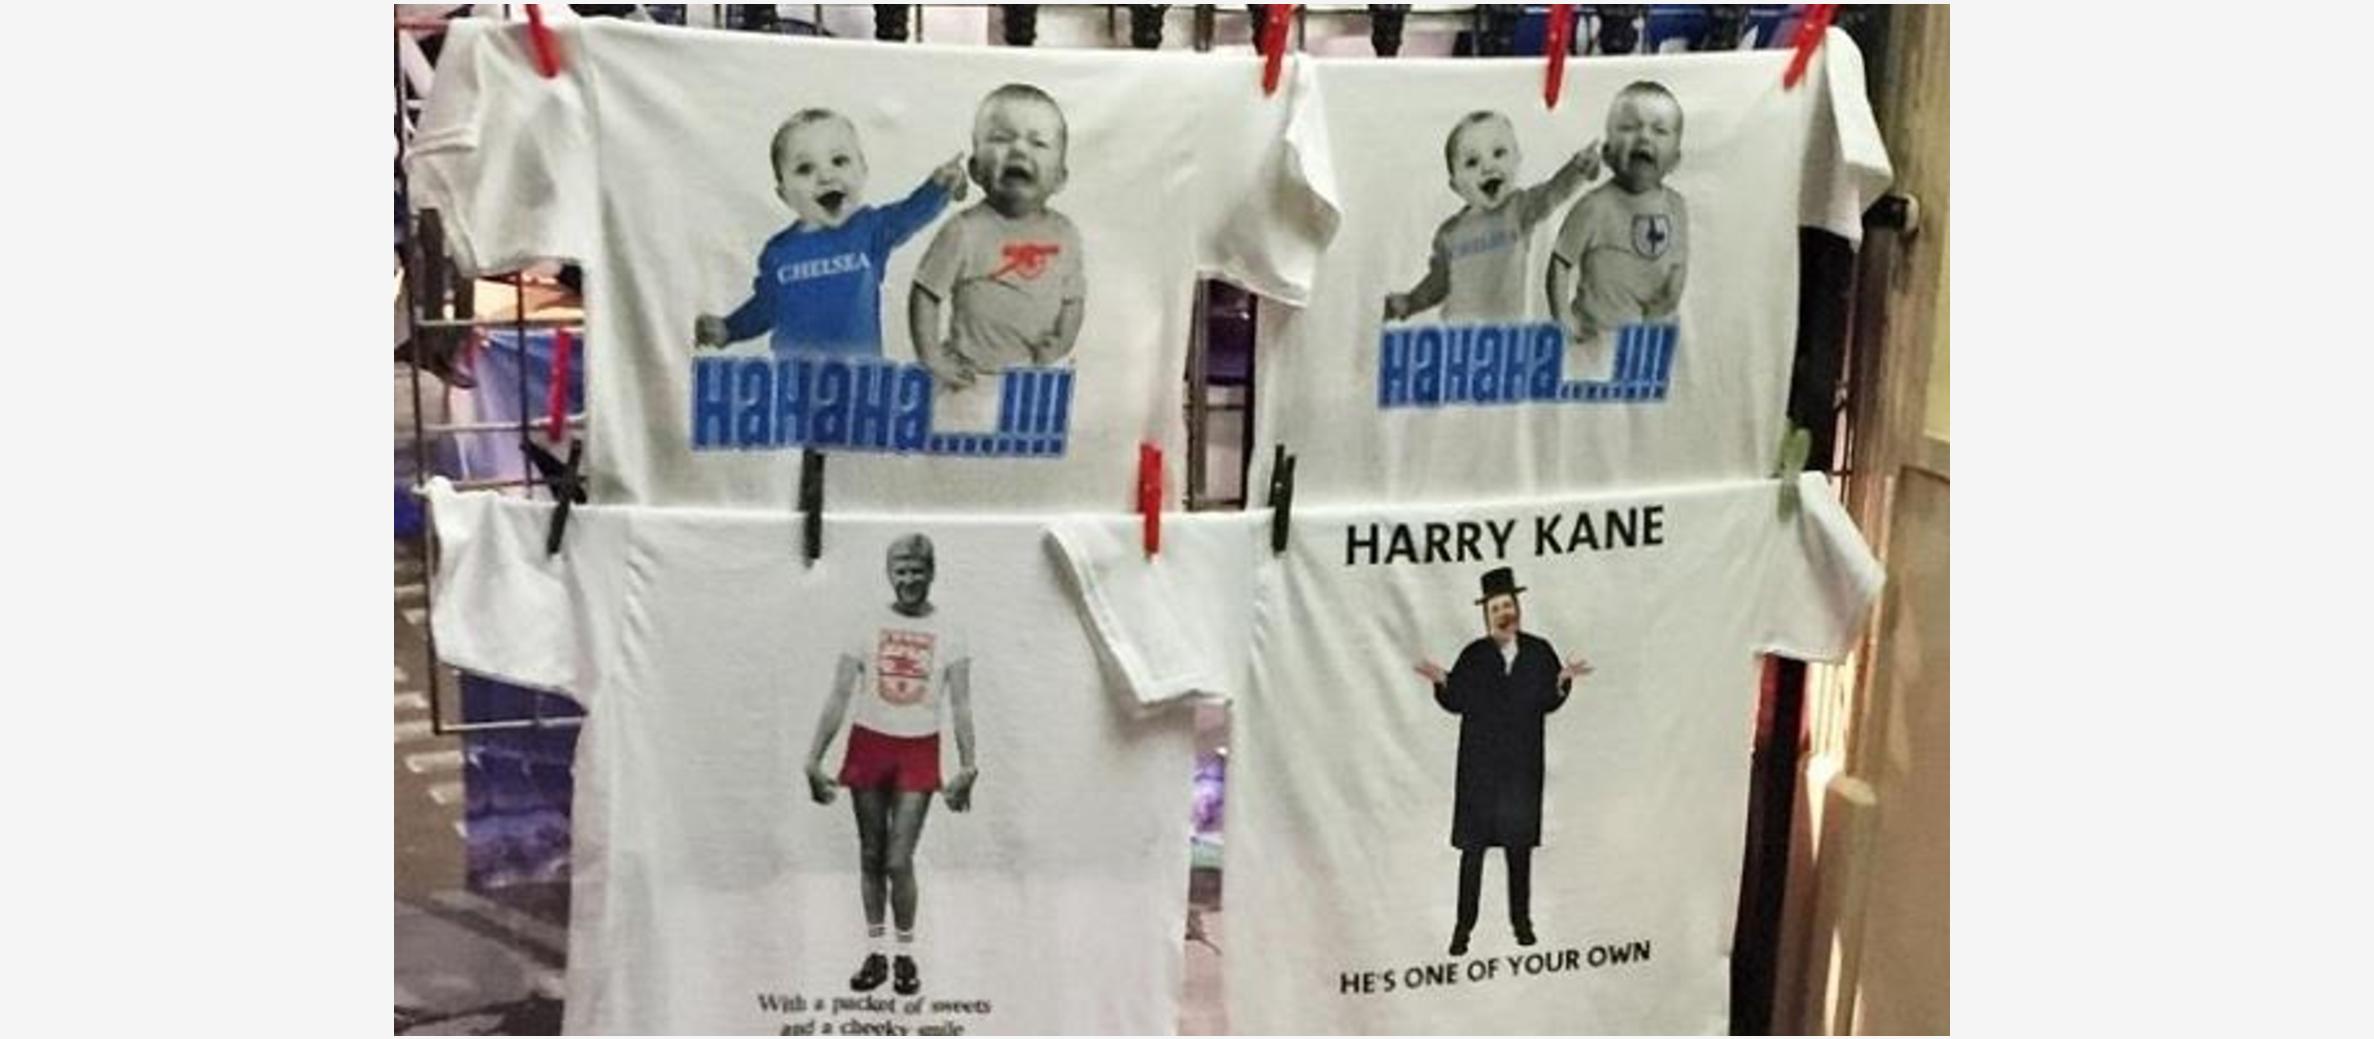 Chelsea set to take legal action over Harry Kane ‘Hasidic Jew’ shirt